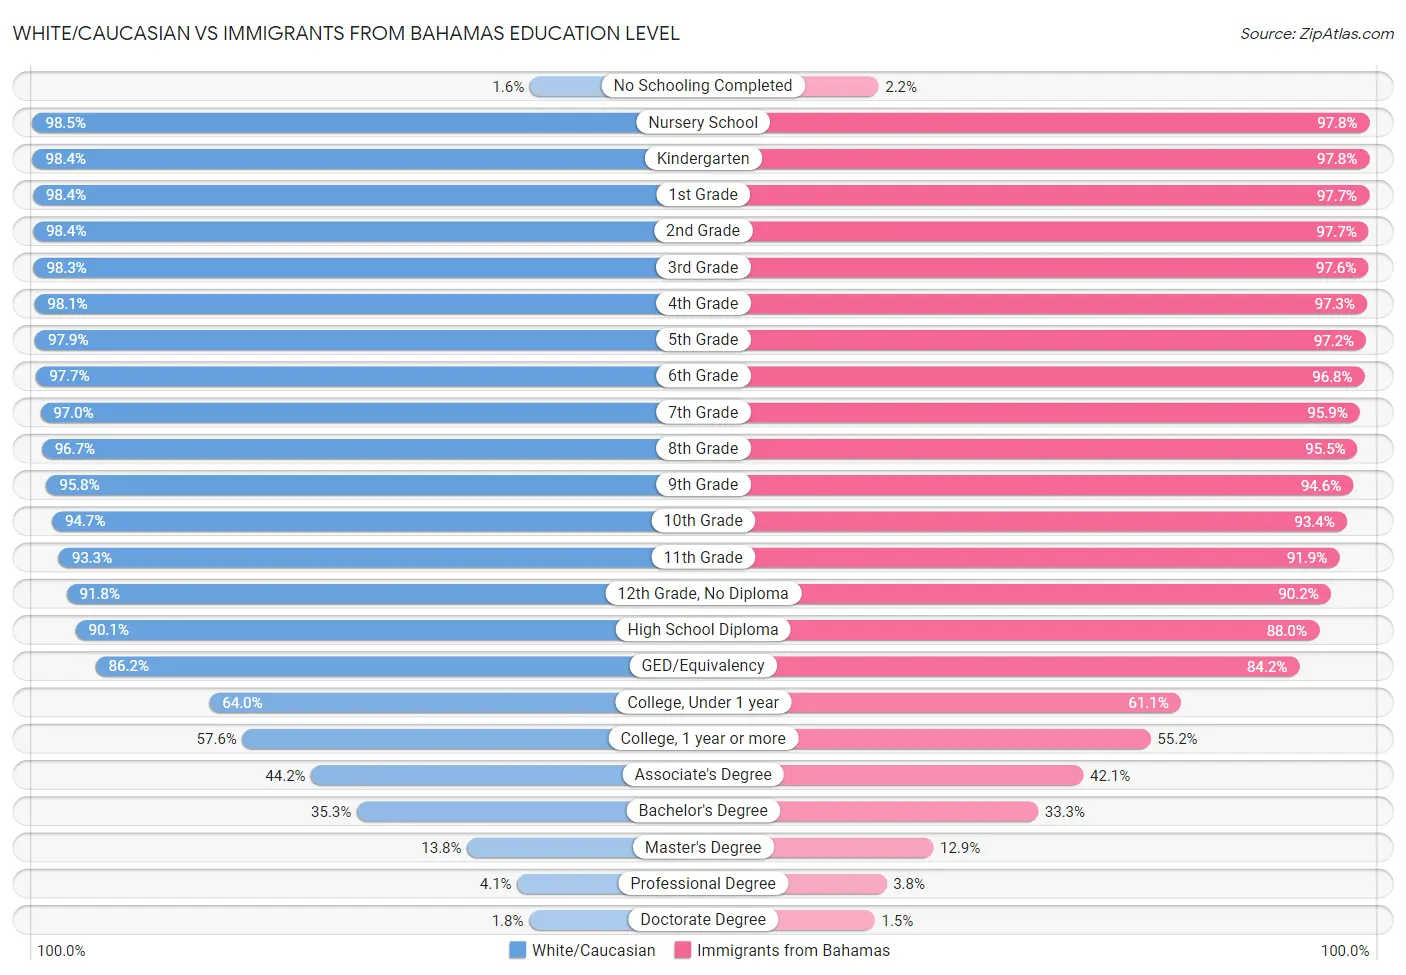 White/Caucasian vs Immigrants from Bahamas Education Level